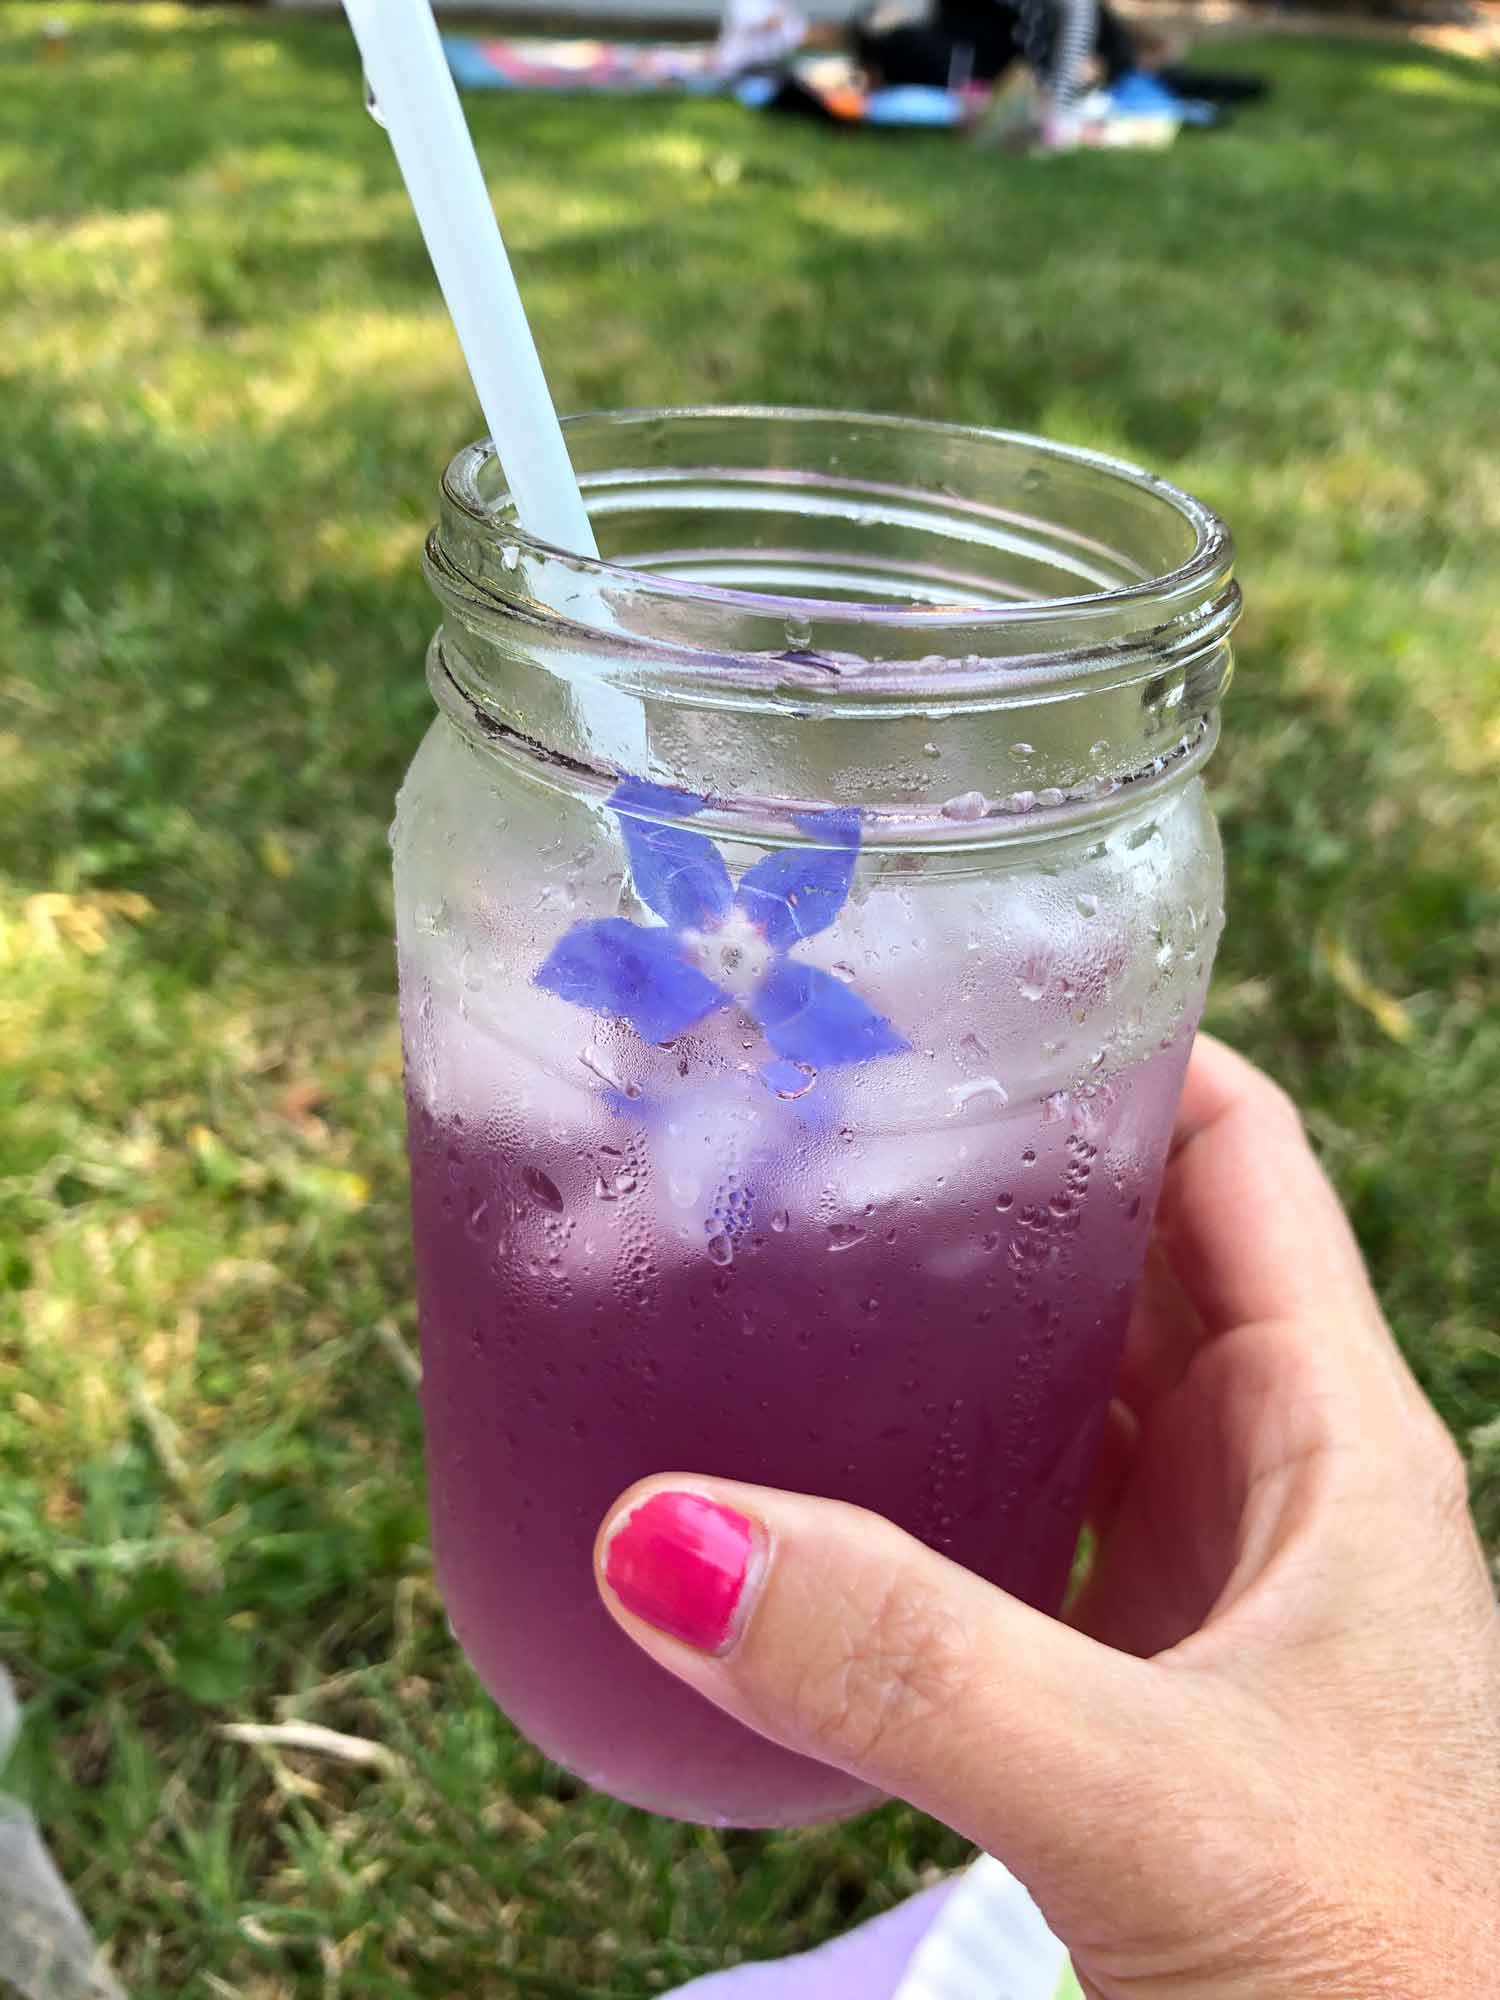 having some purple lemonade at a social distance picnic in my backyard